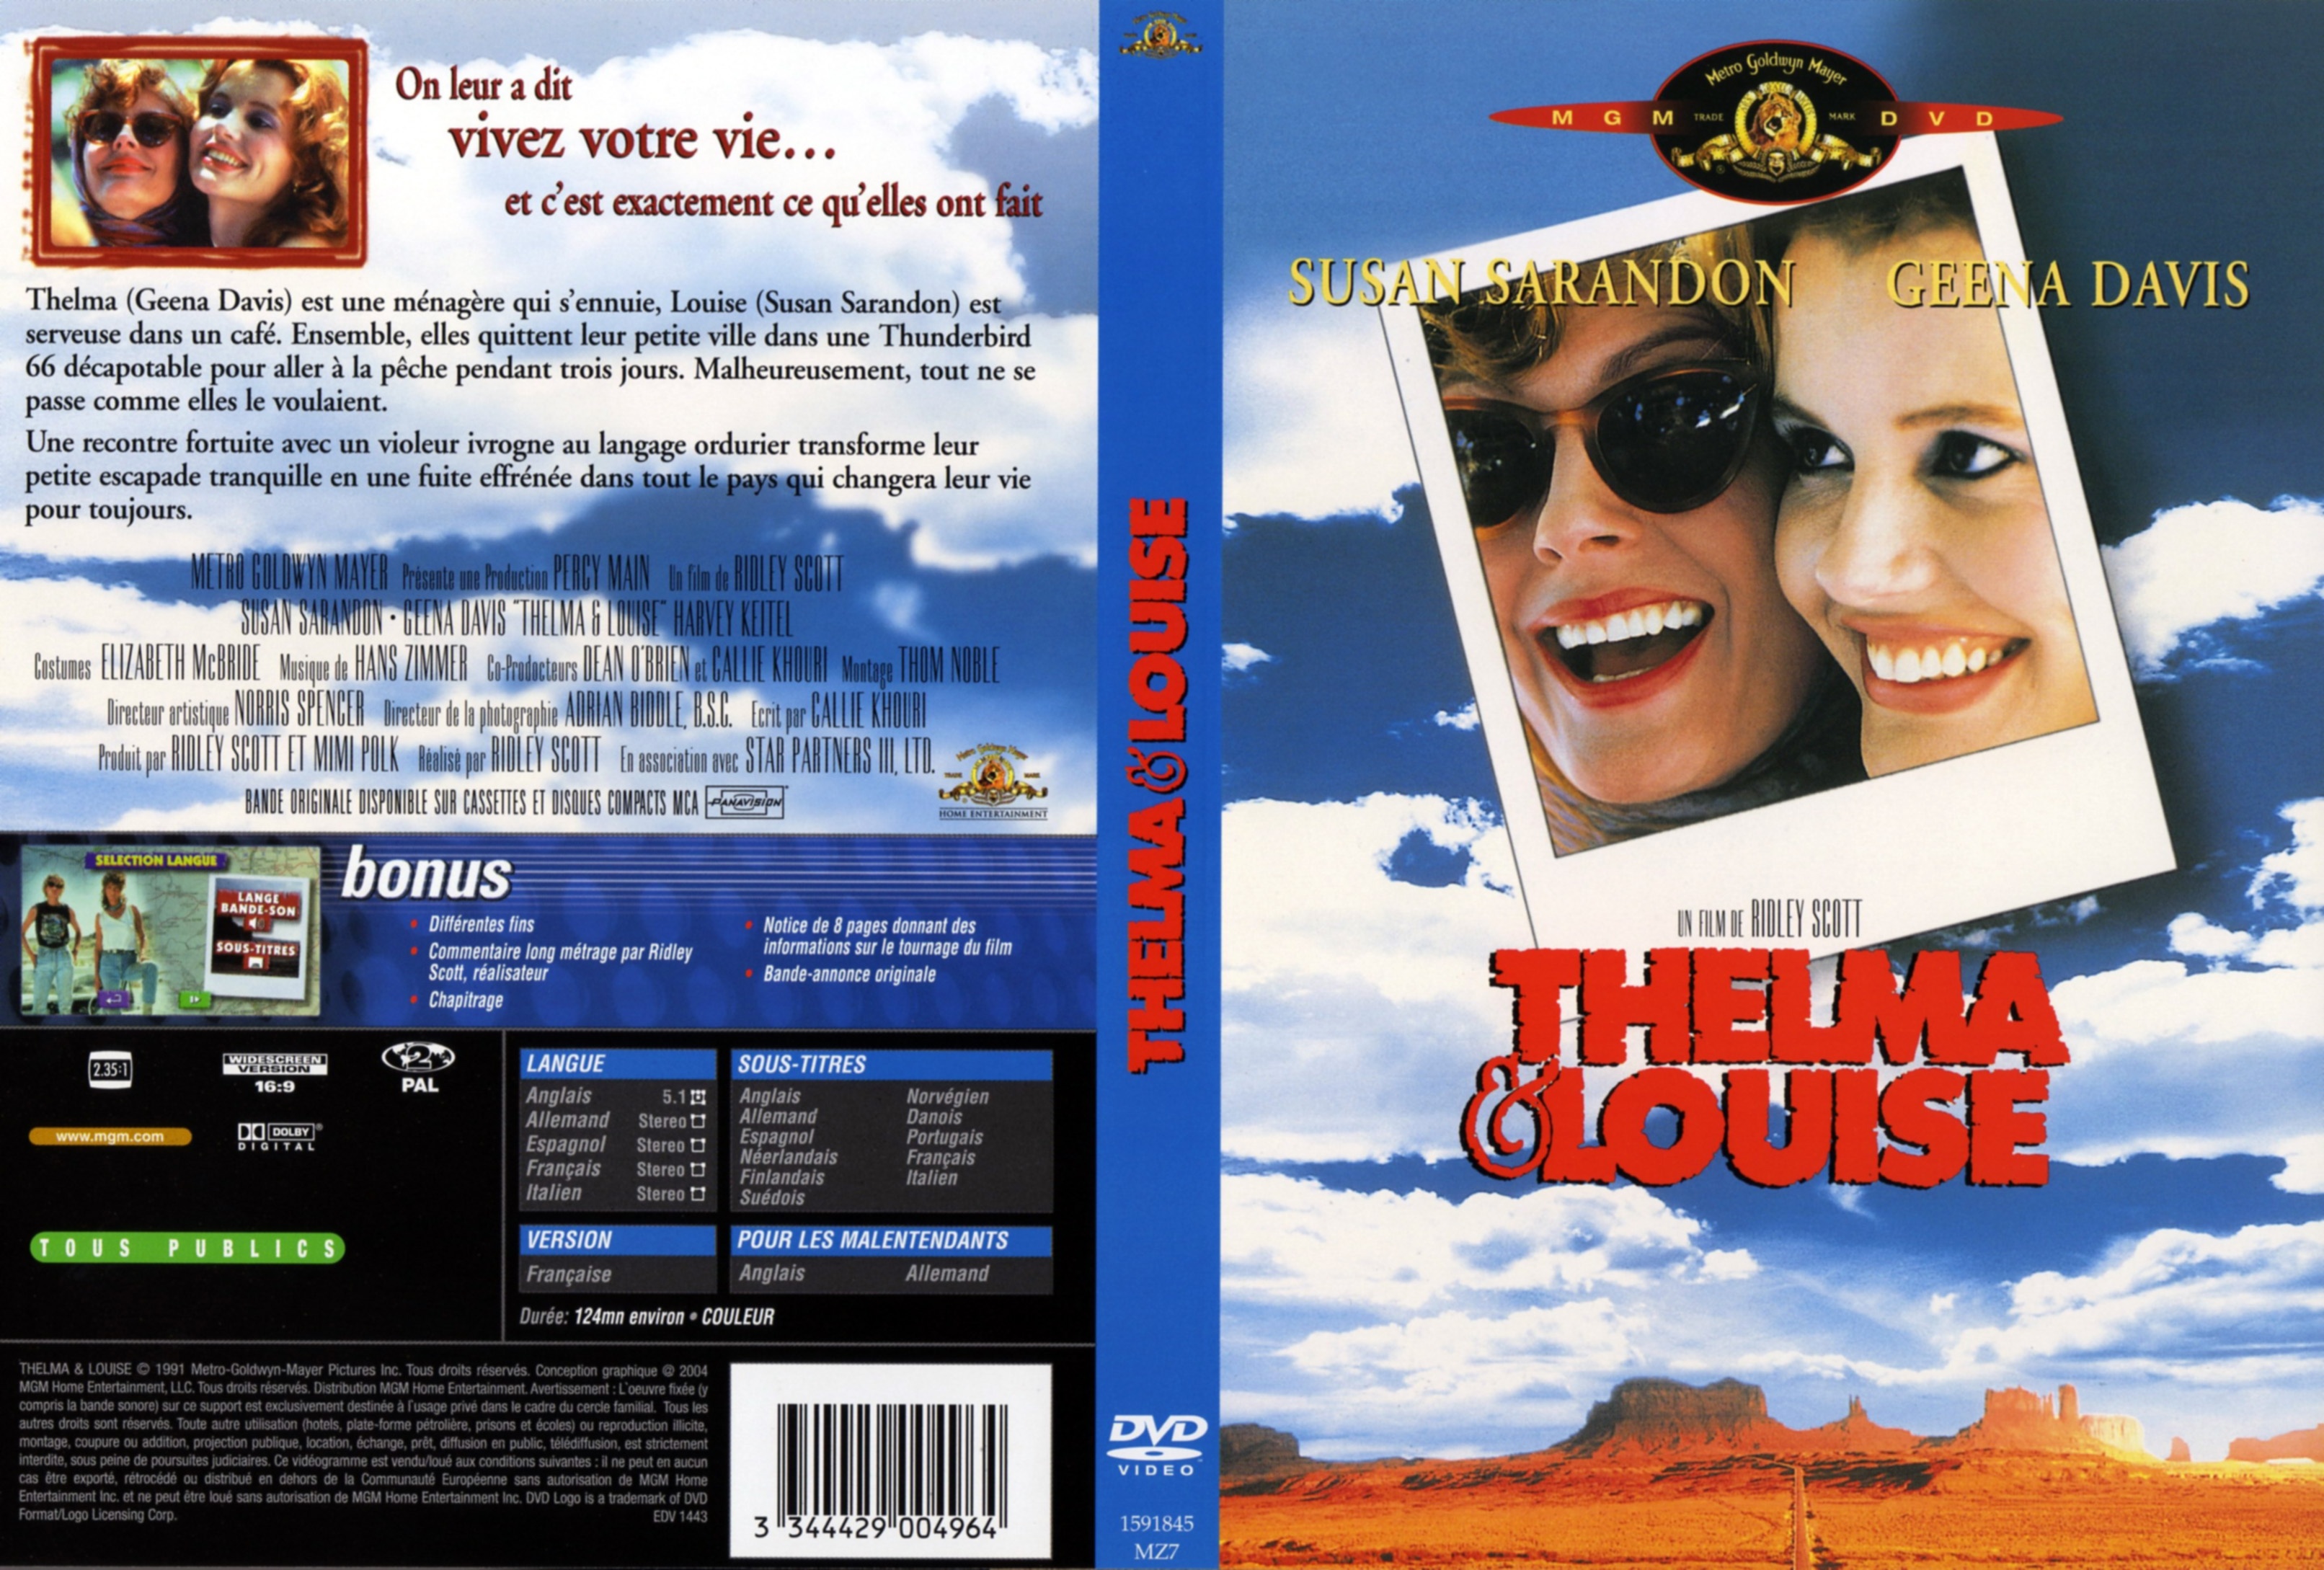 Jaquette DVD Thelma et Louise v2